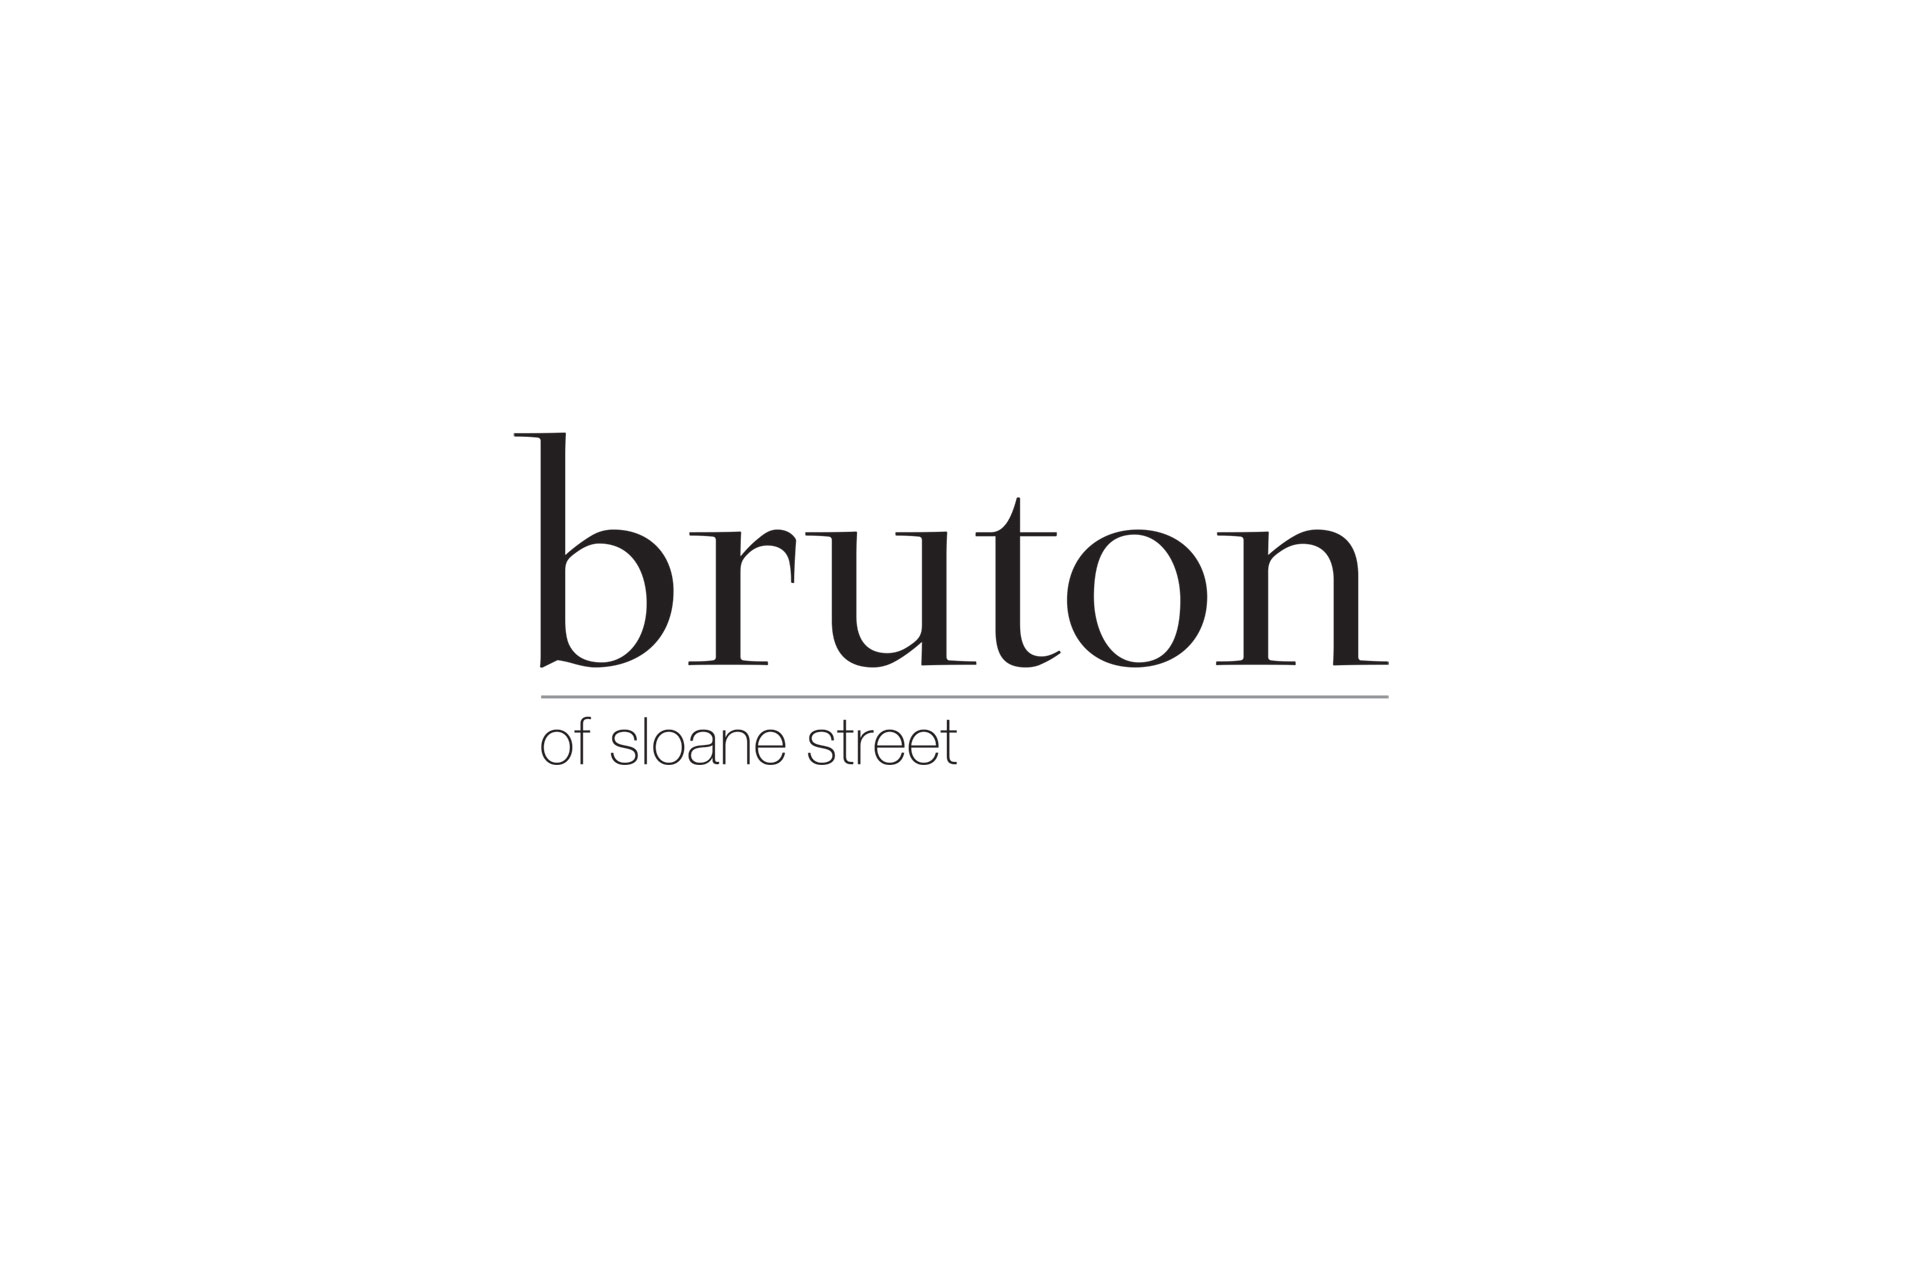 bruton-of-sloane-street-logotype.jpg